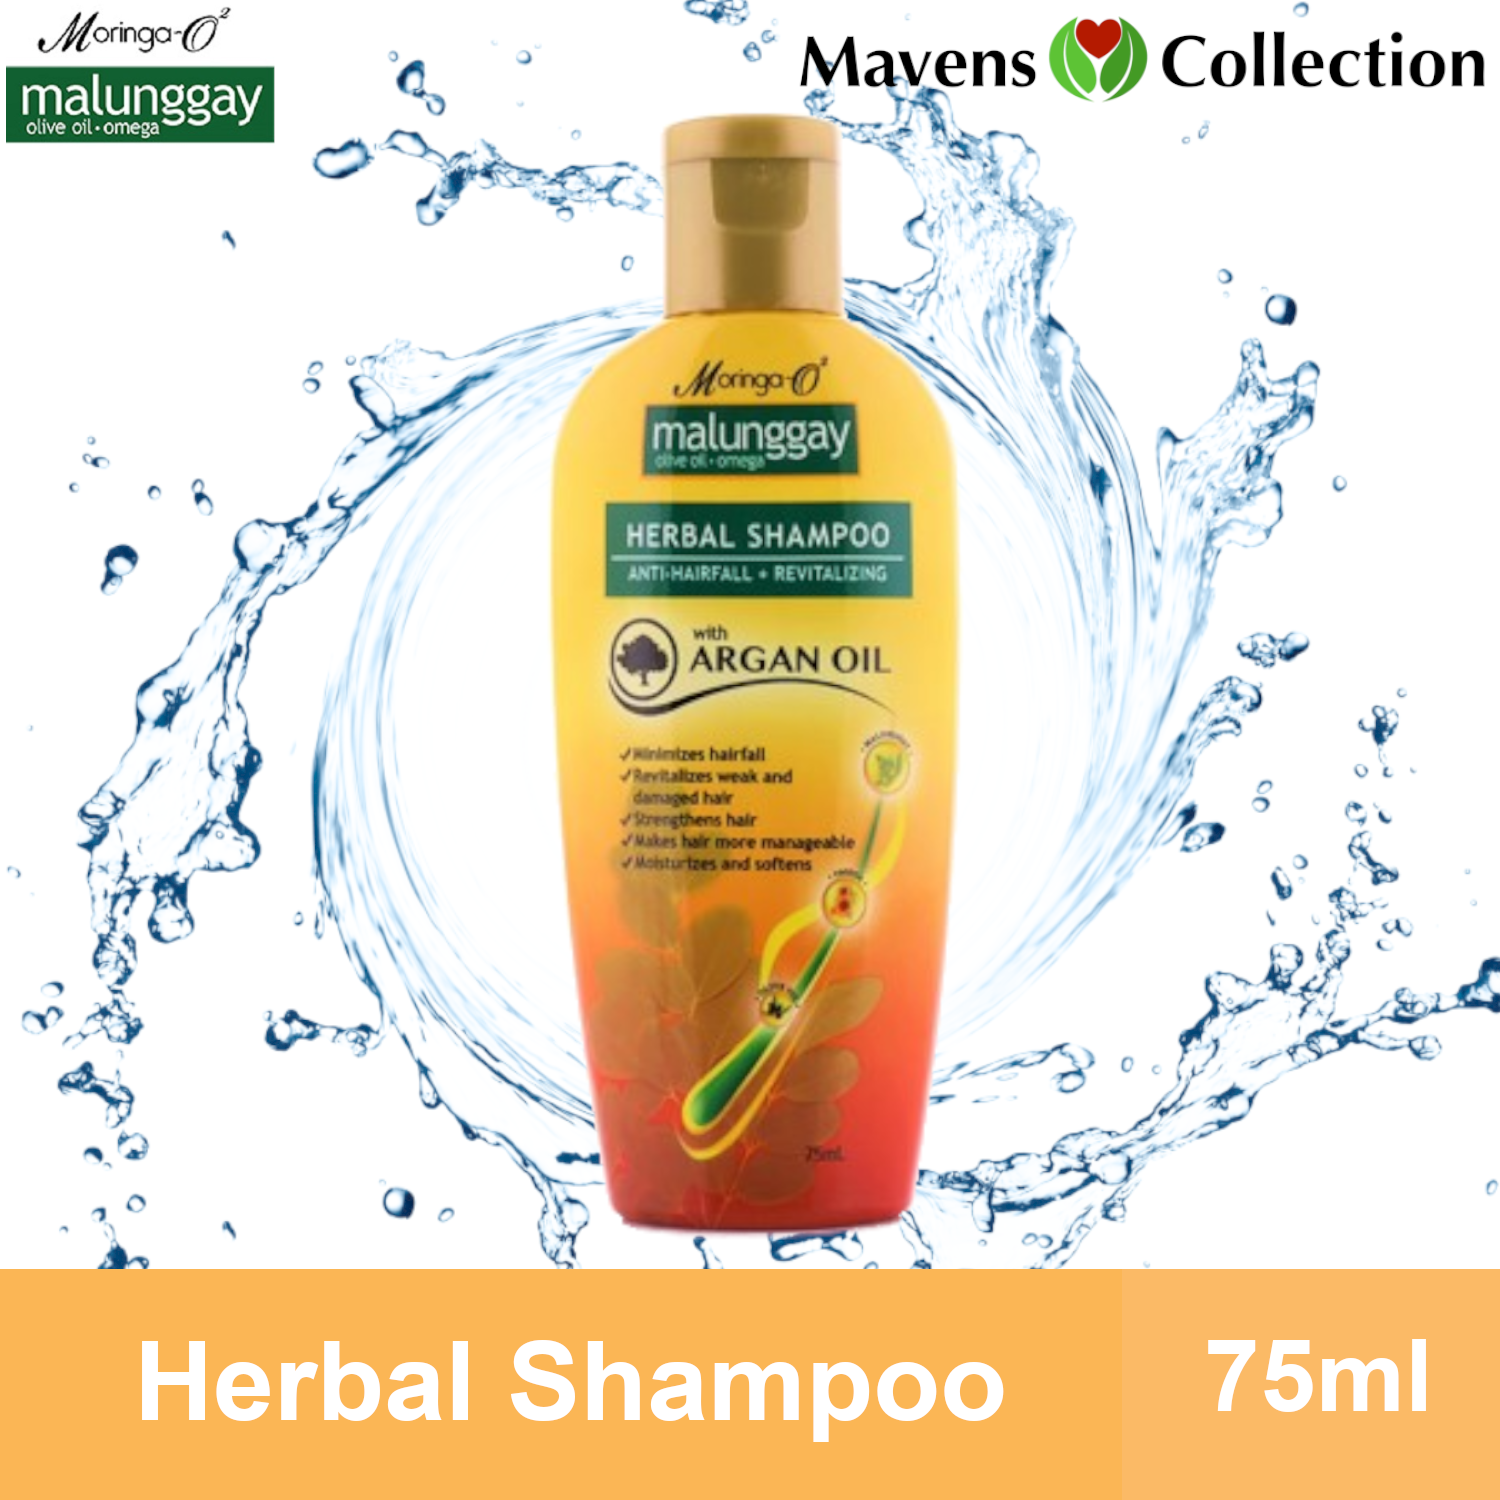 Moringa-O2 Malunggay 75ml Herbal Shampoo Anti-Hairfall + Revitalizing ...